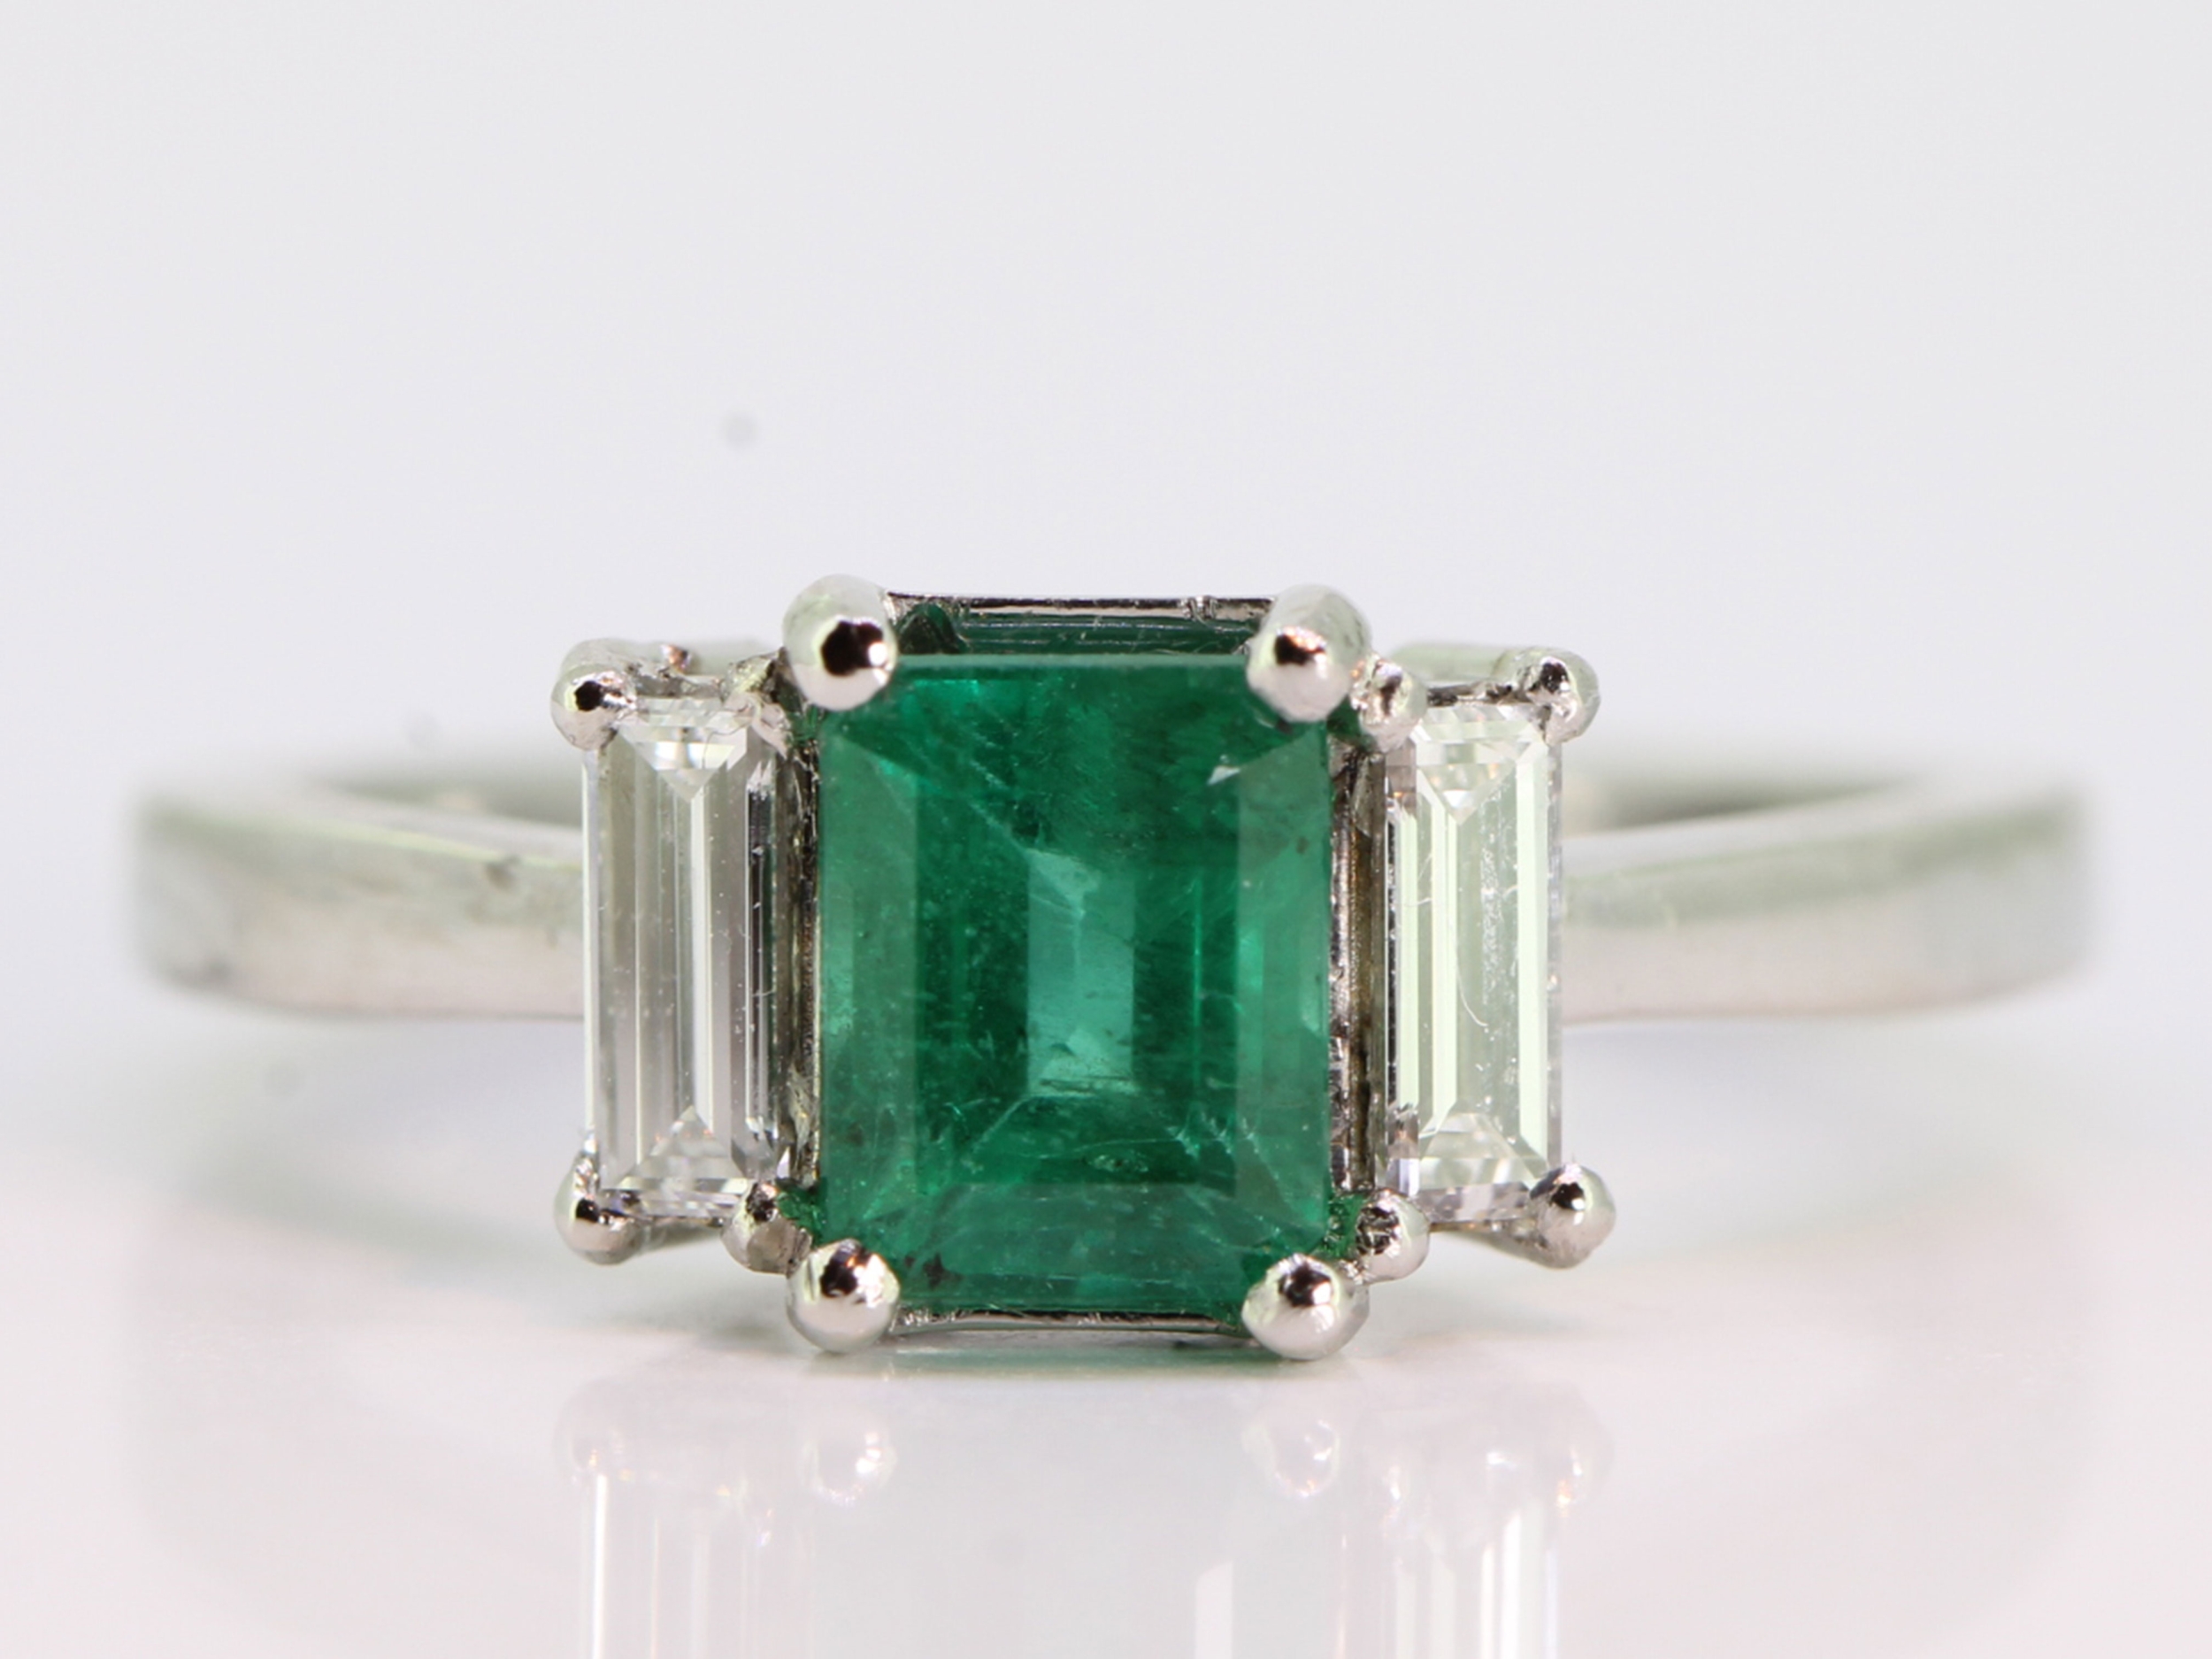 Breathtaking emerald and diamond art deco inspired platinum ring